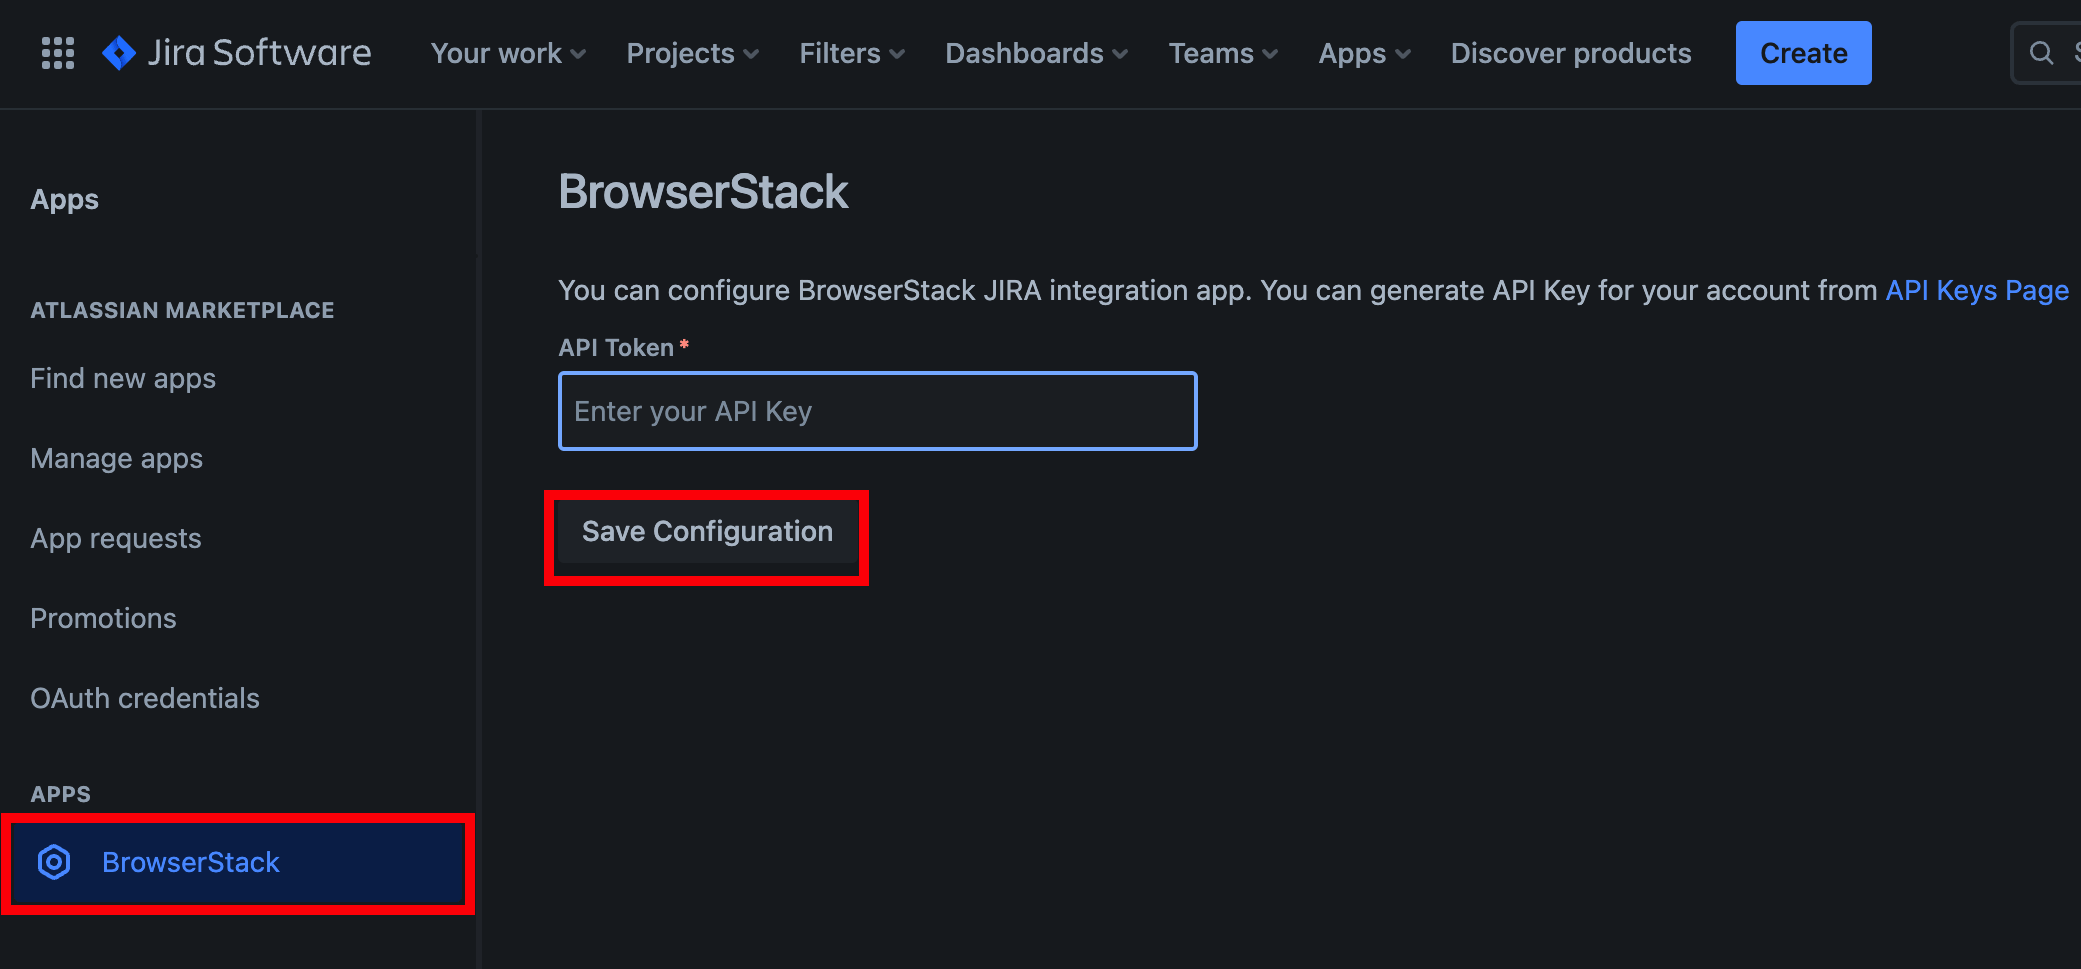 Configuring BrowserStack app in Jira